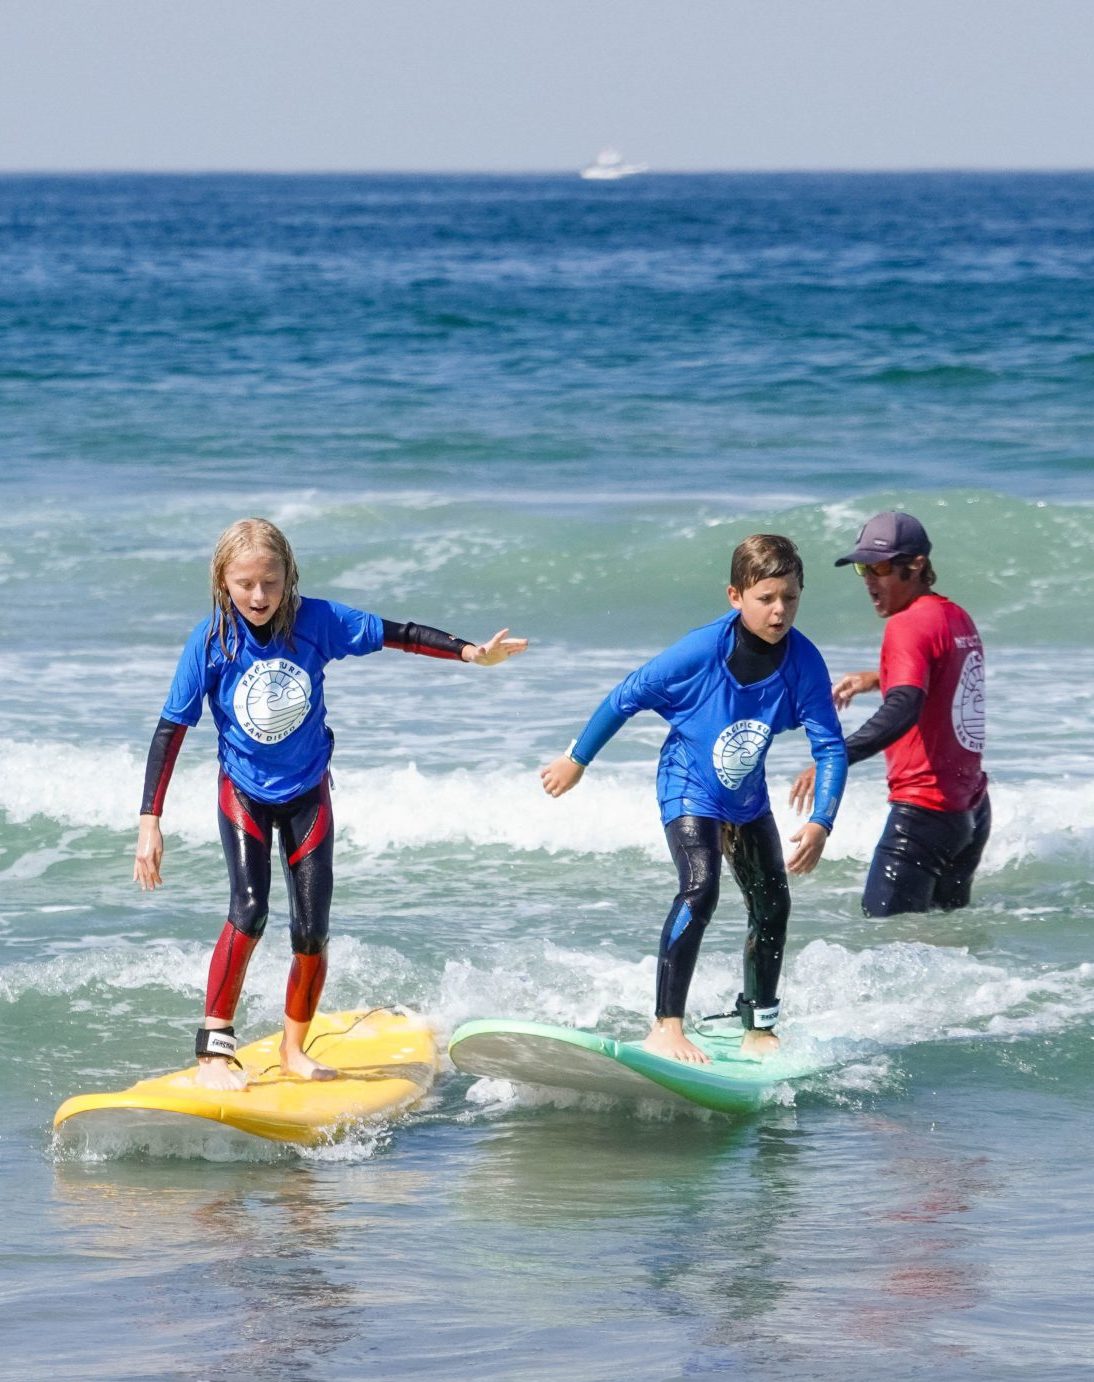 Surf Camp San Diego